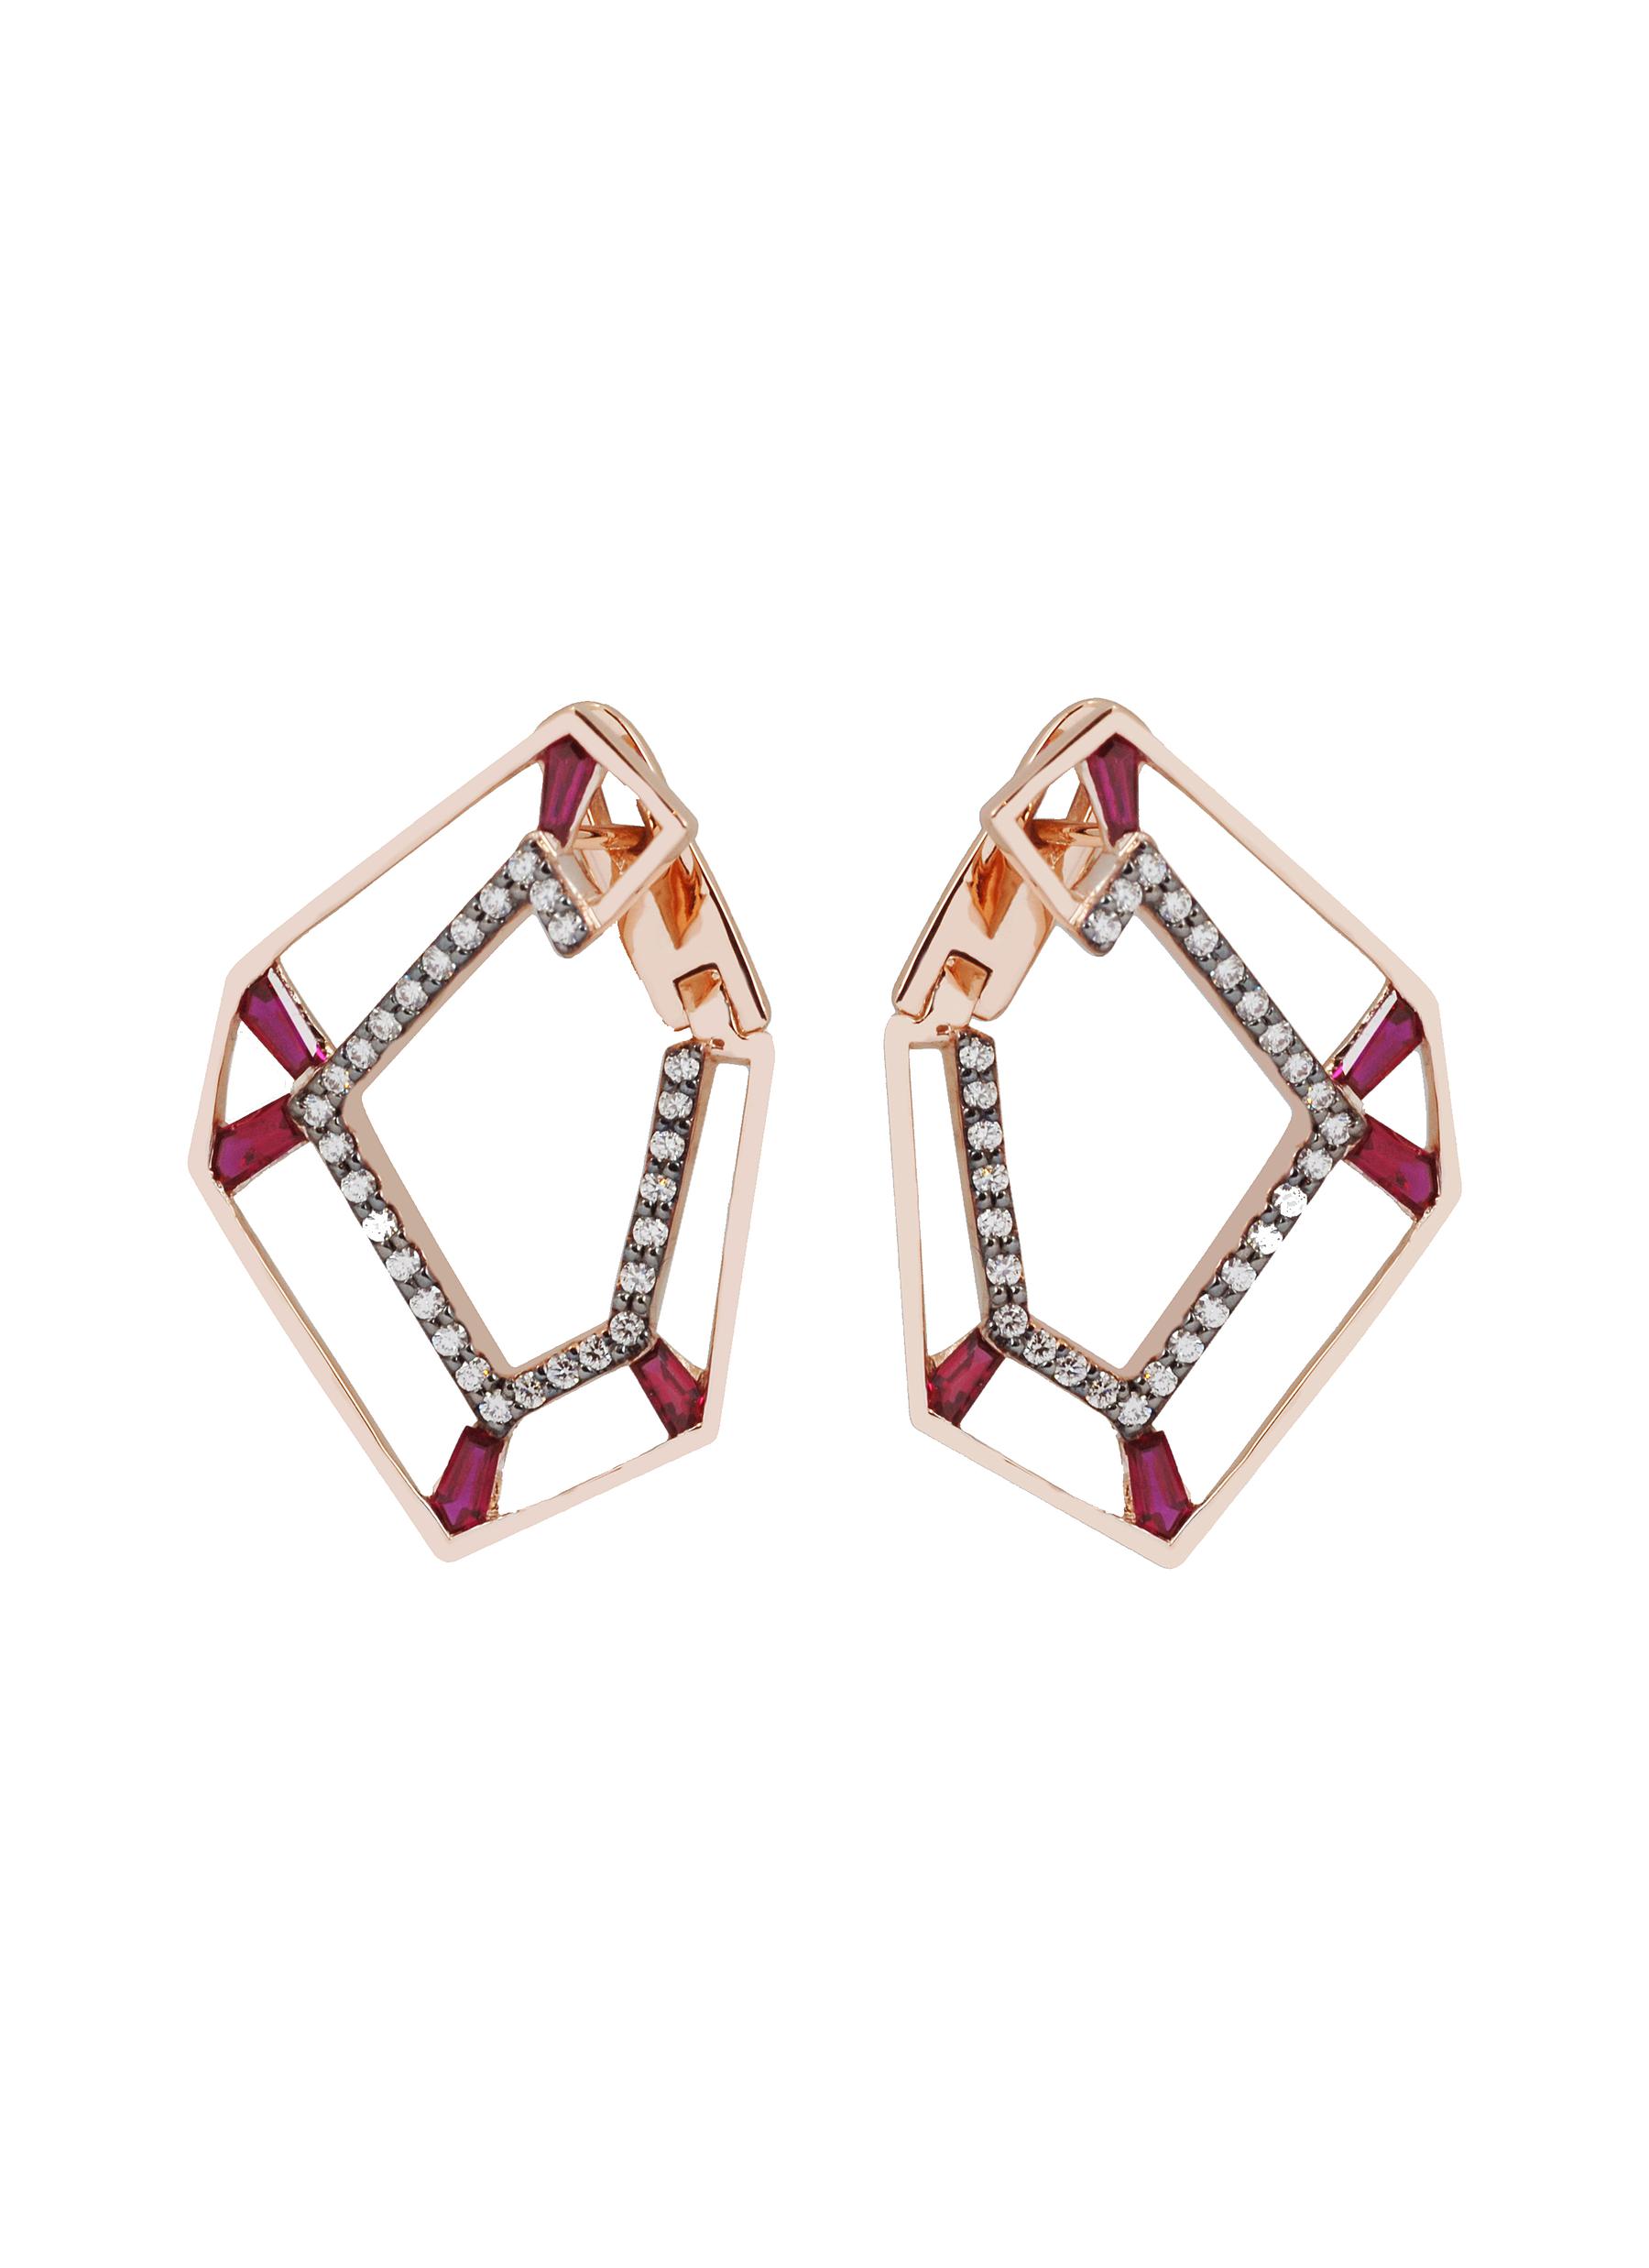 KAVANT & SHARART ‘Origami Link No.5' Brown Diamond Ruby 18K Rose Gold Earrings